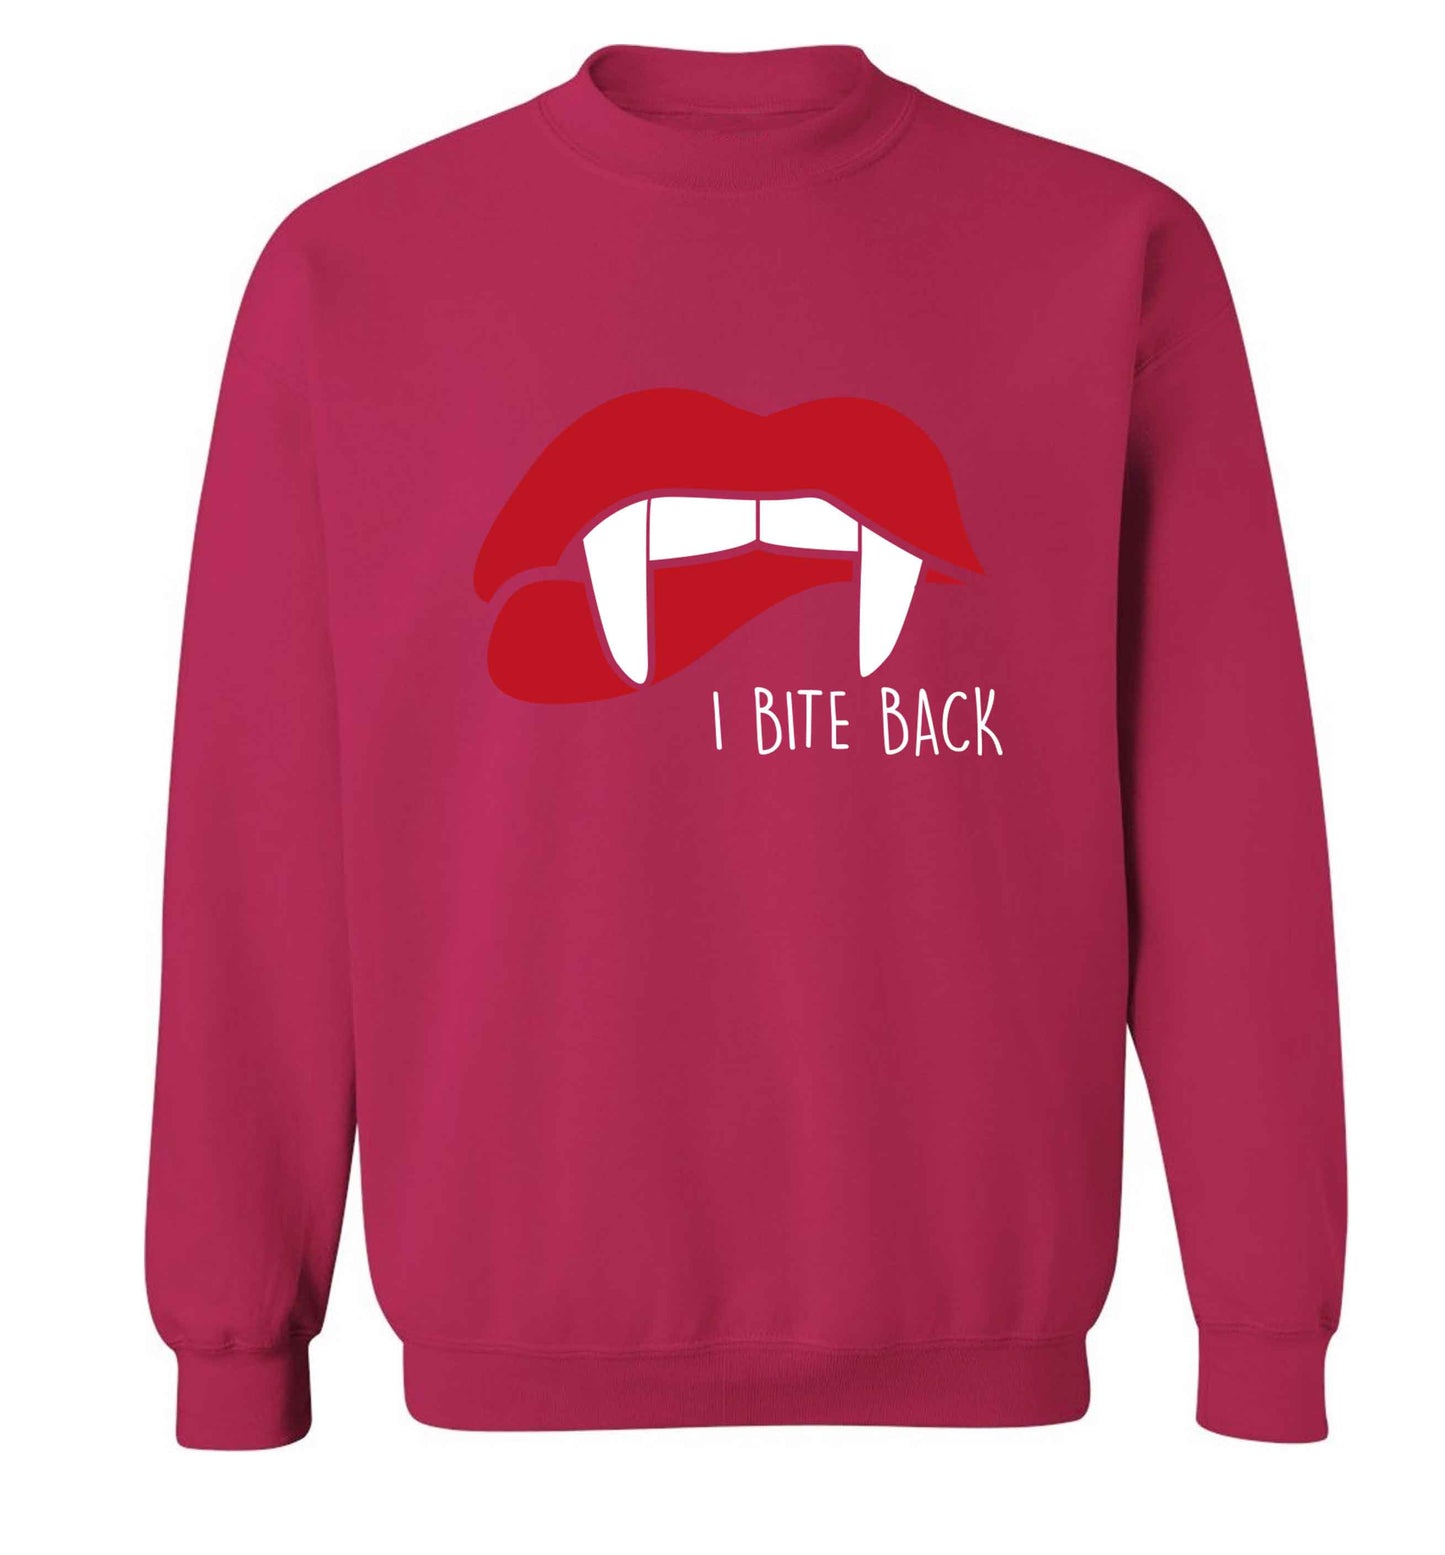 I bite back adult's unisex pink sweater 2XL